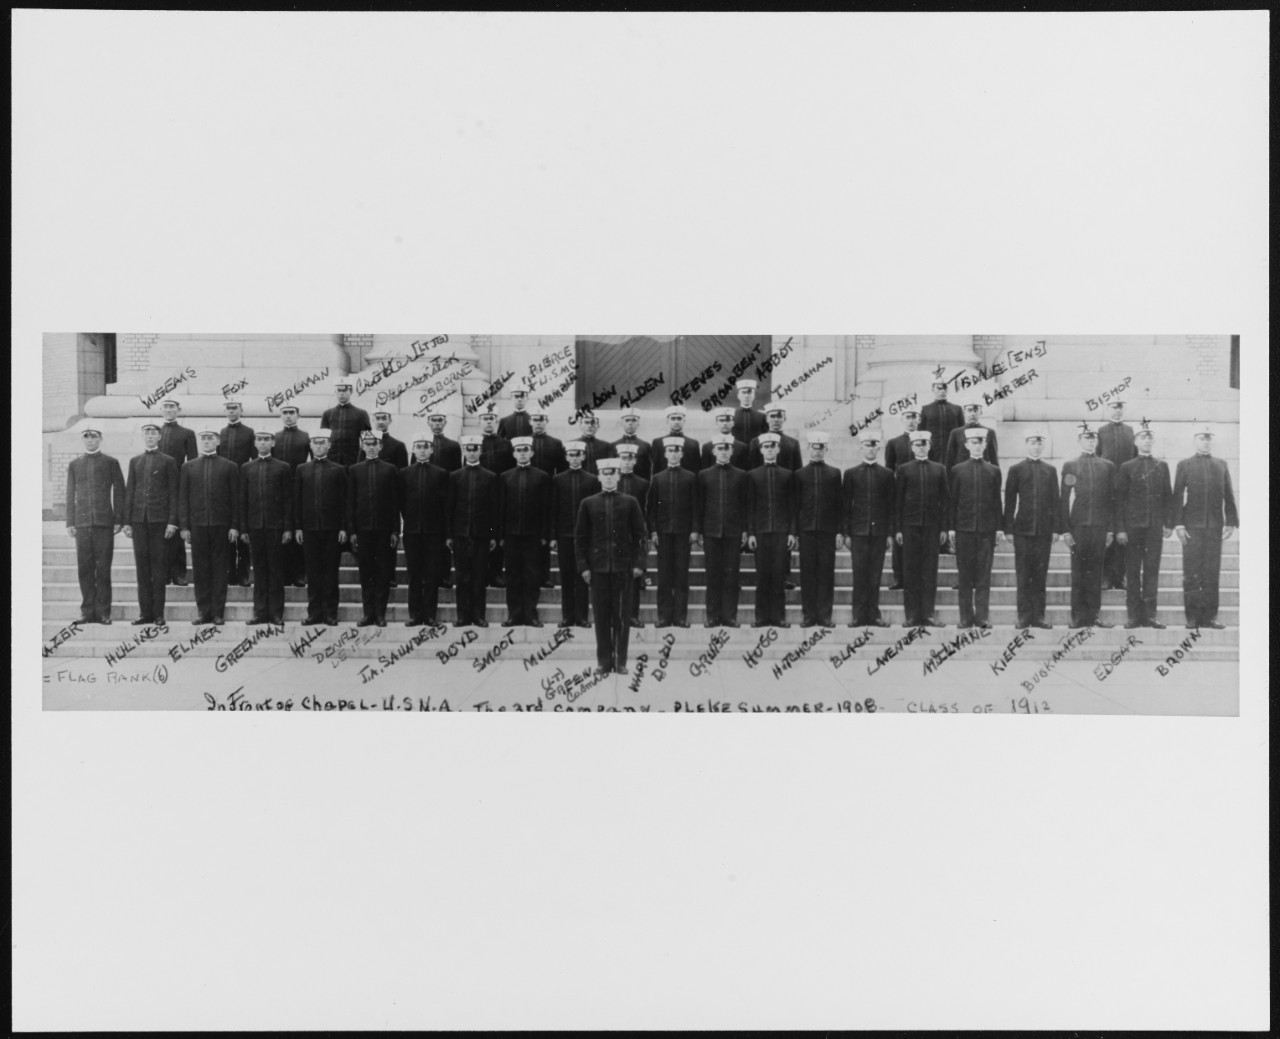 Class of 1912 -3rd company